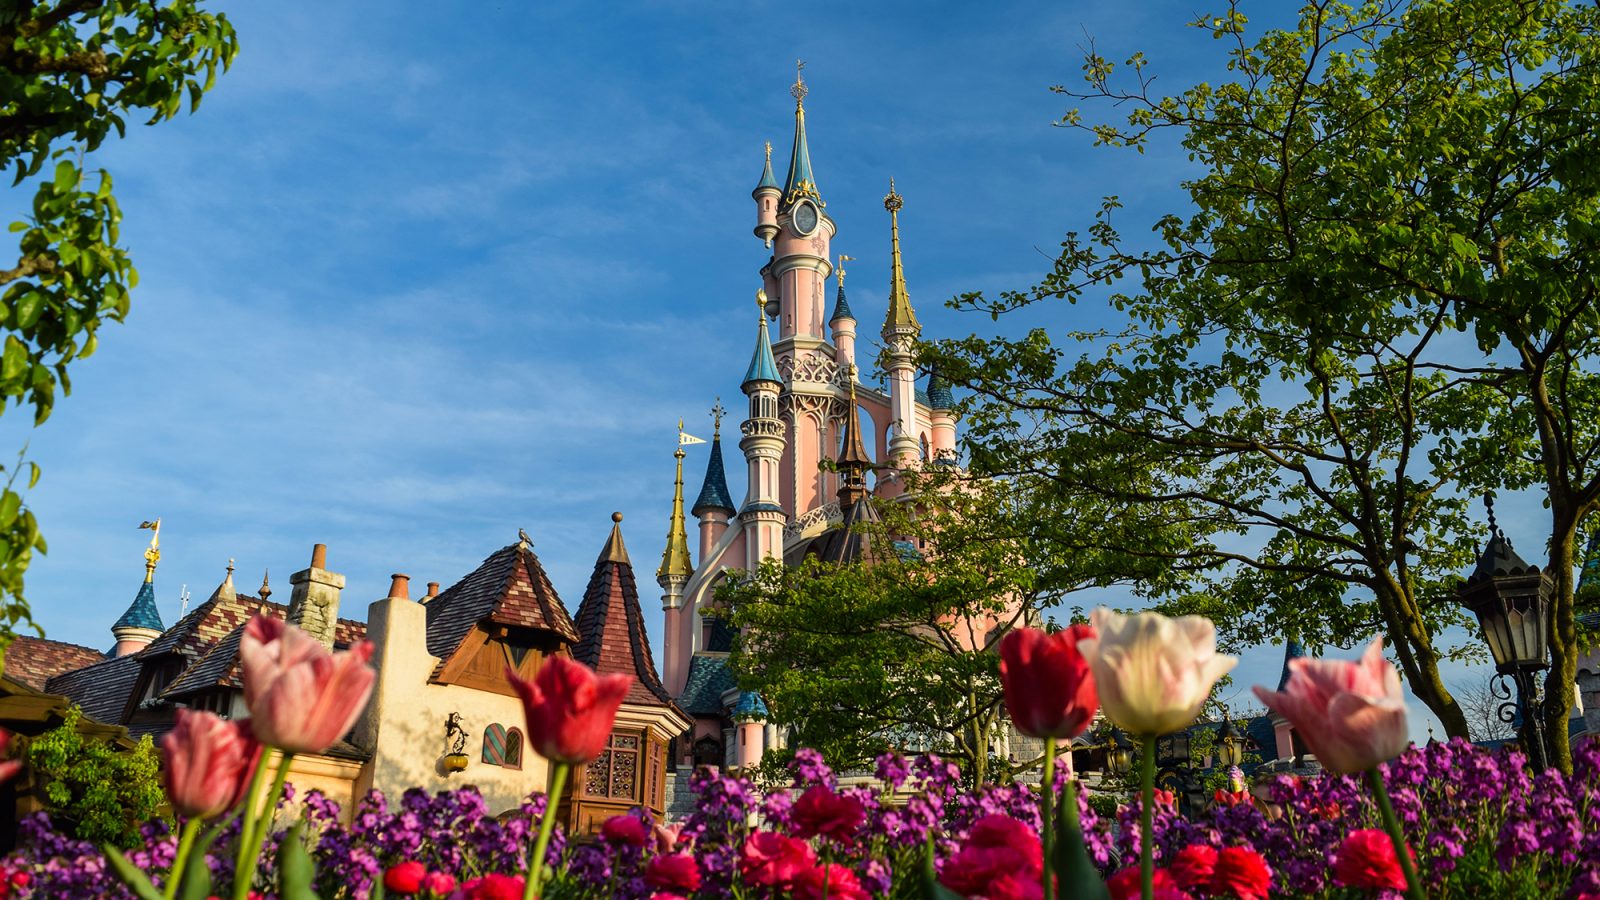 Disneyland Paris Castle with flowers